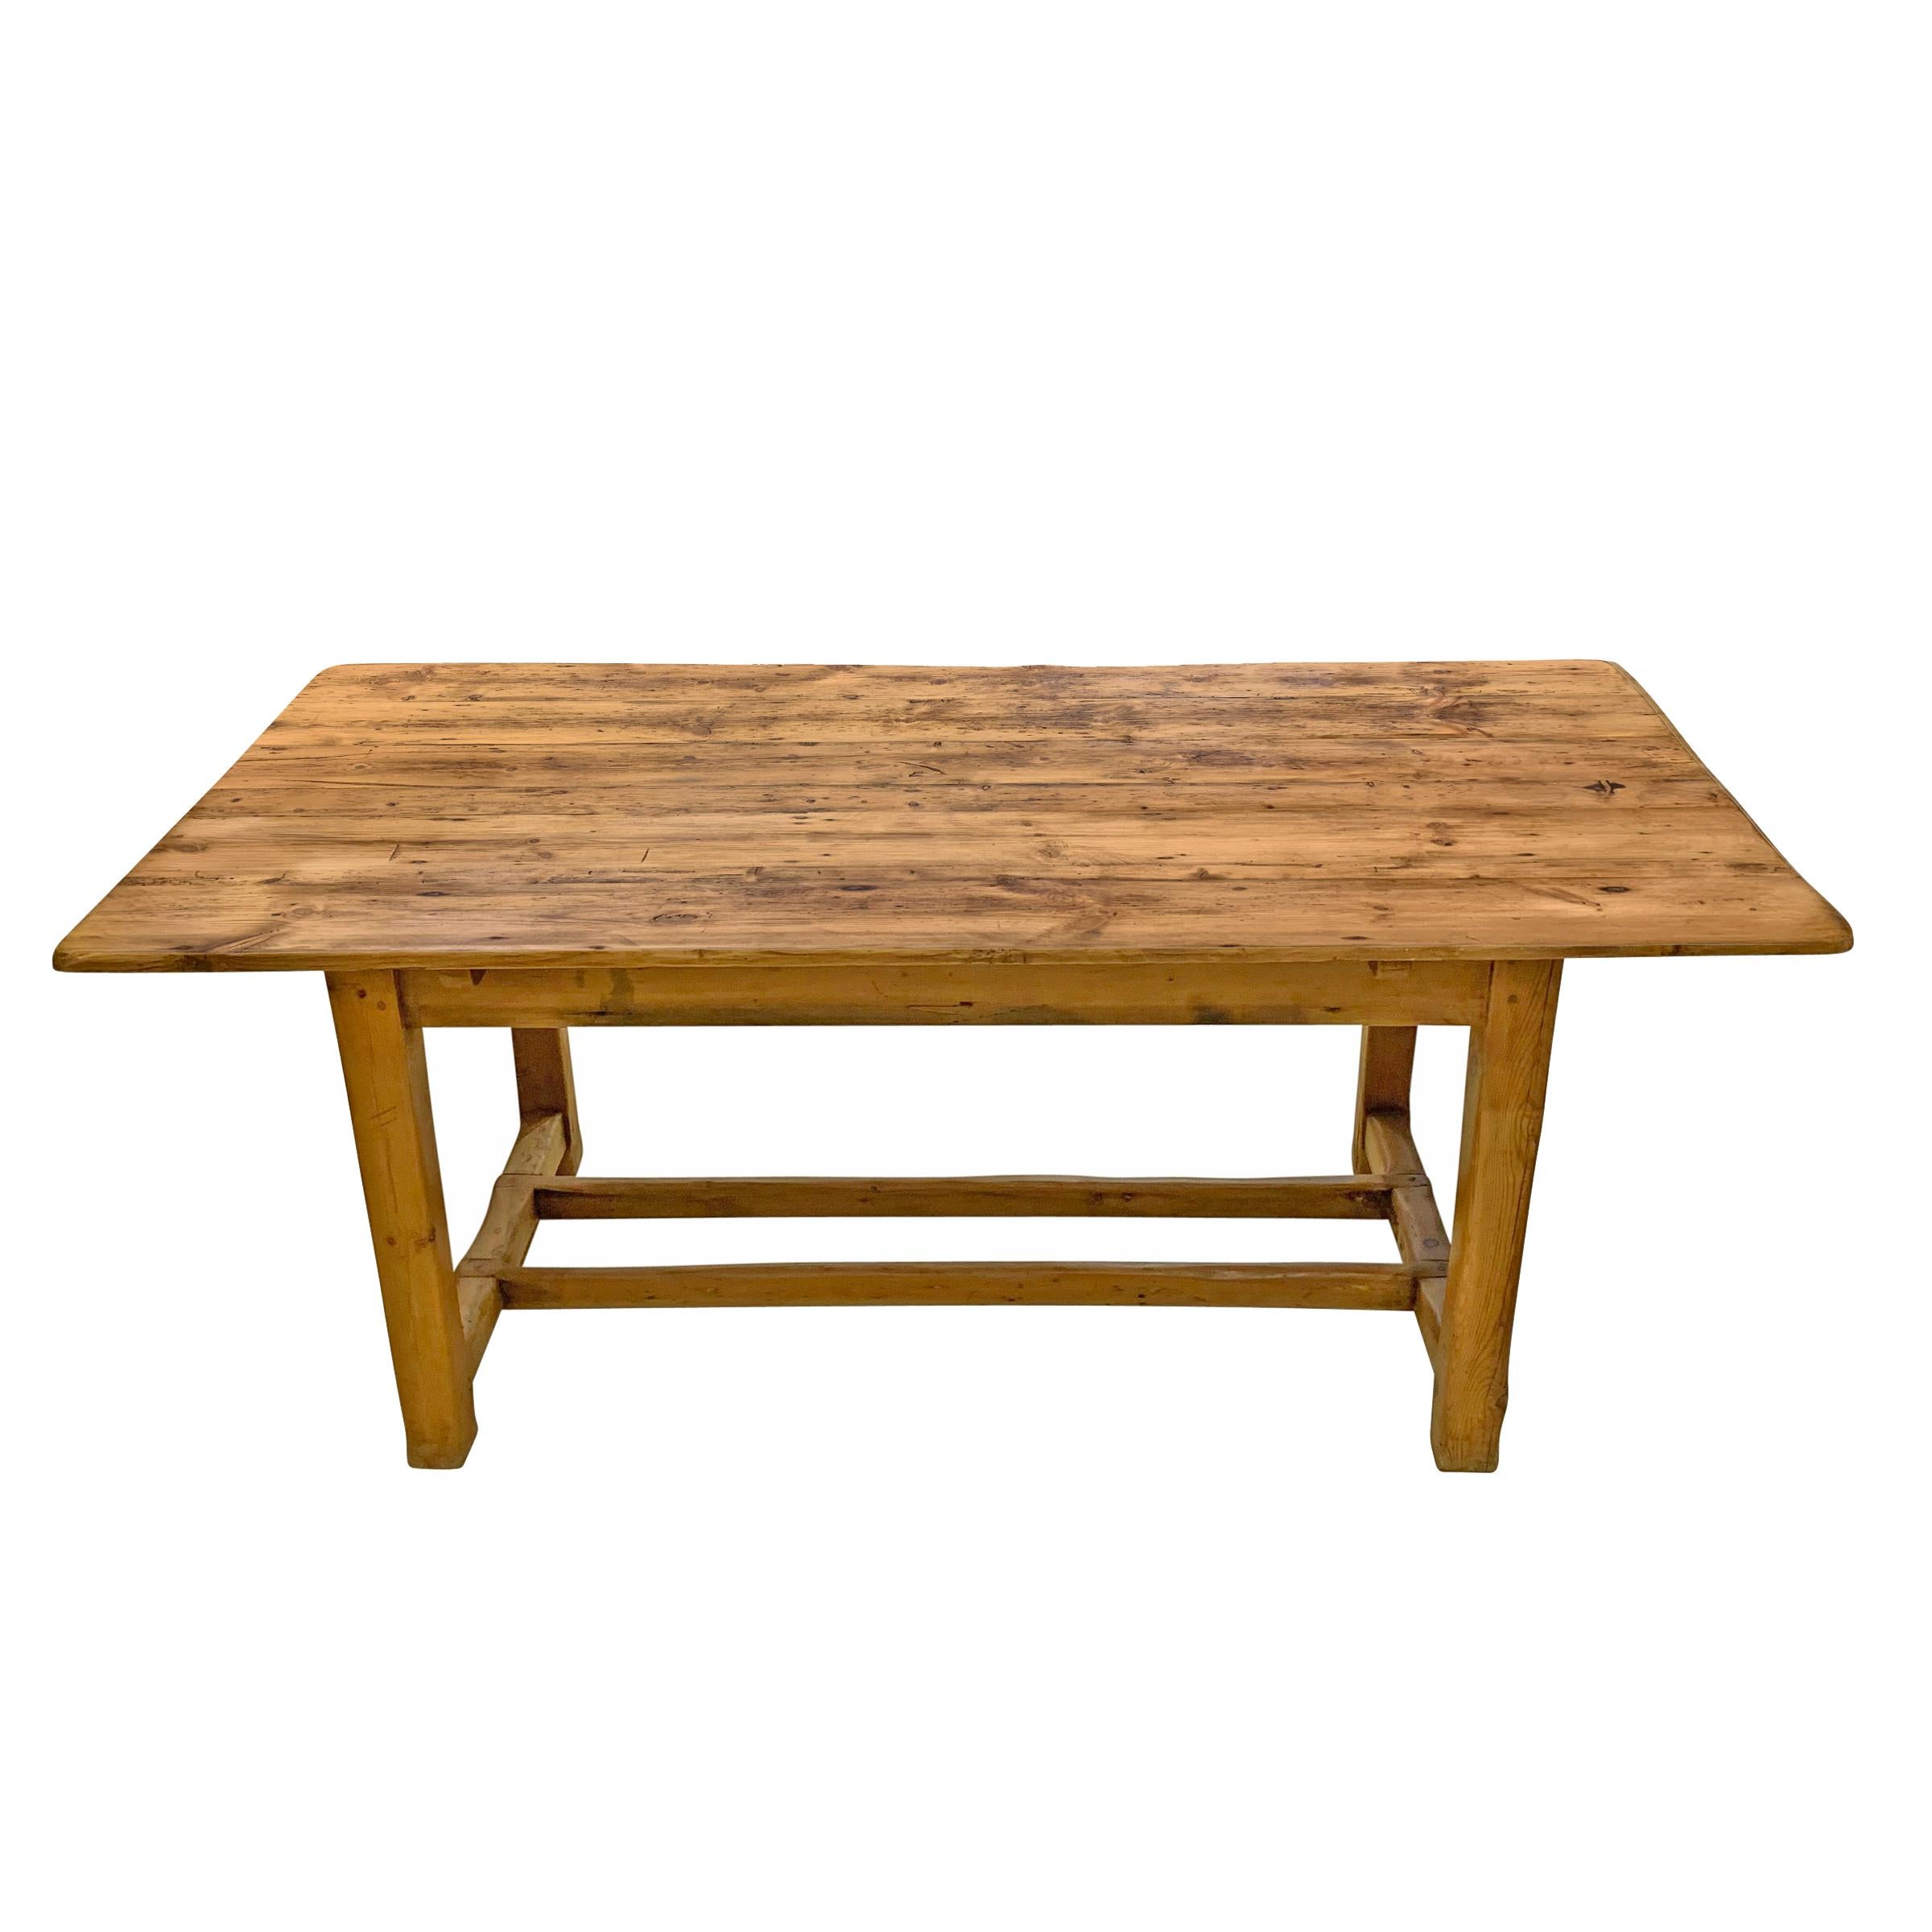 Rustic Early 20th Century English Pine Farm Table